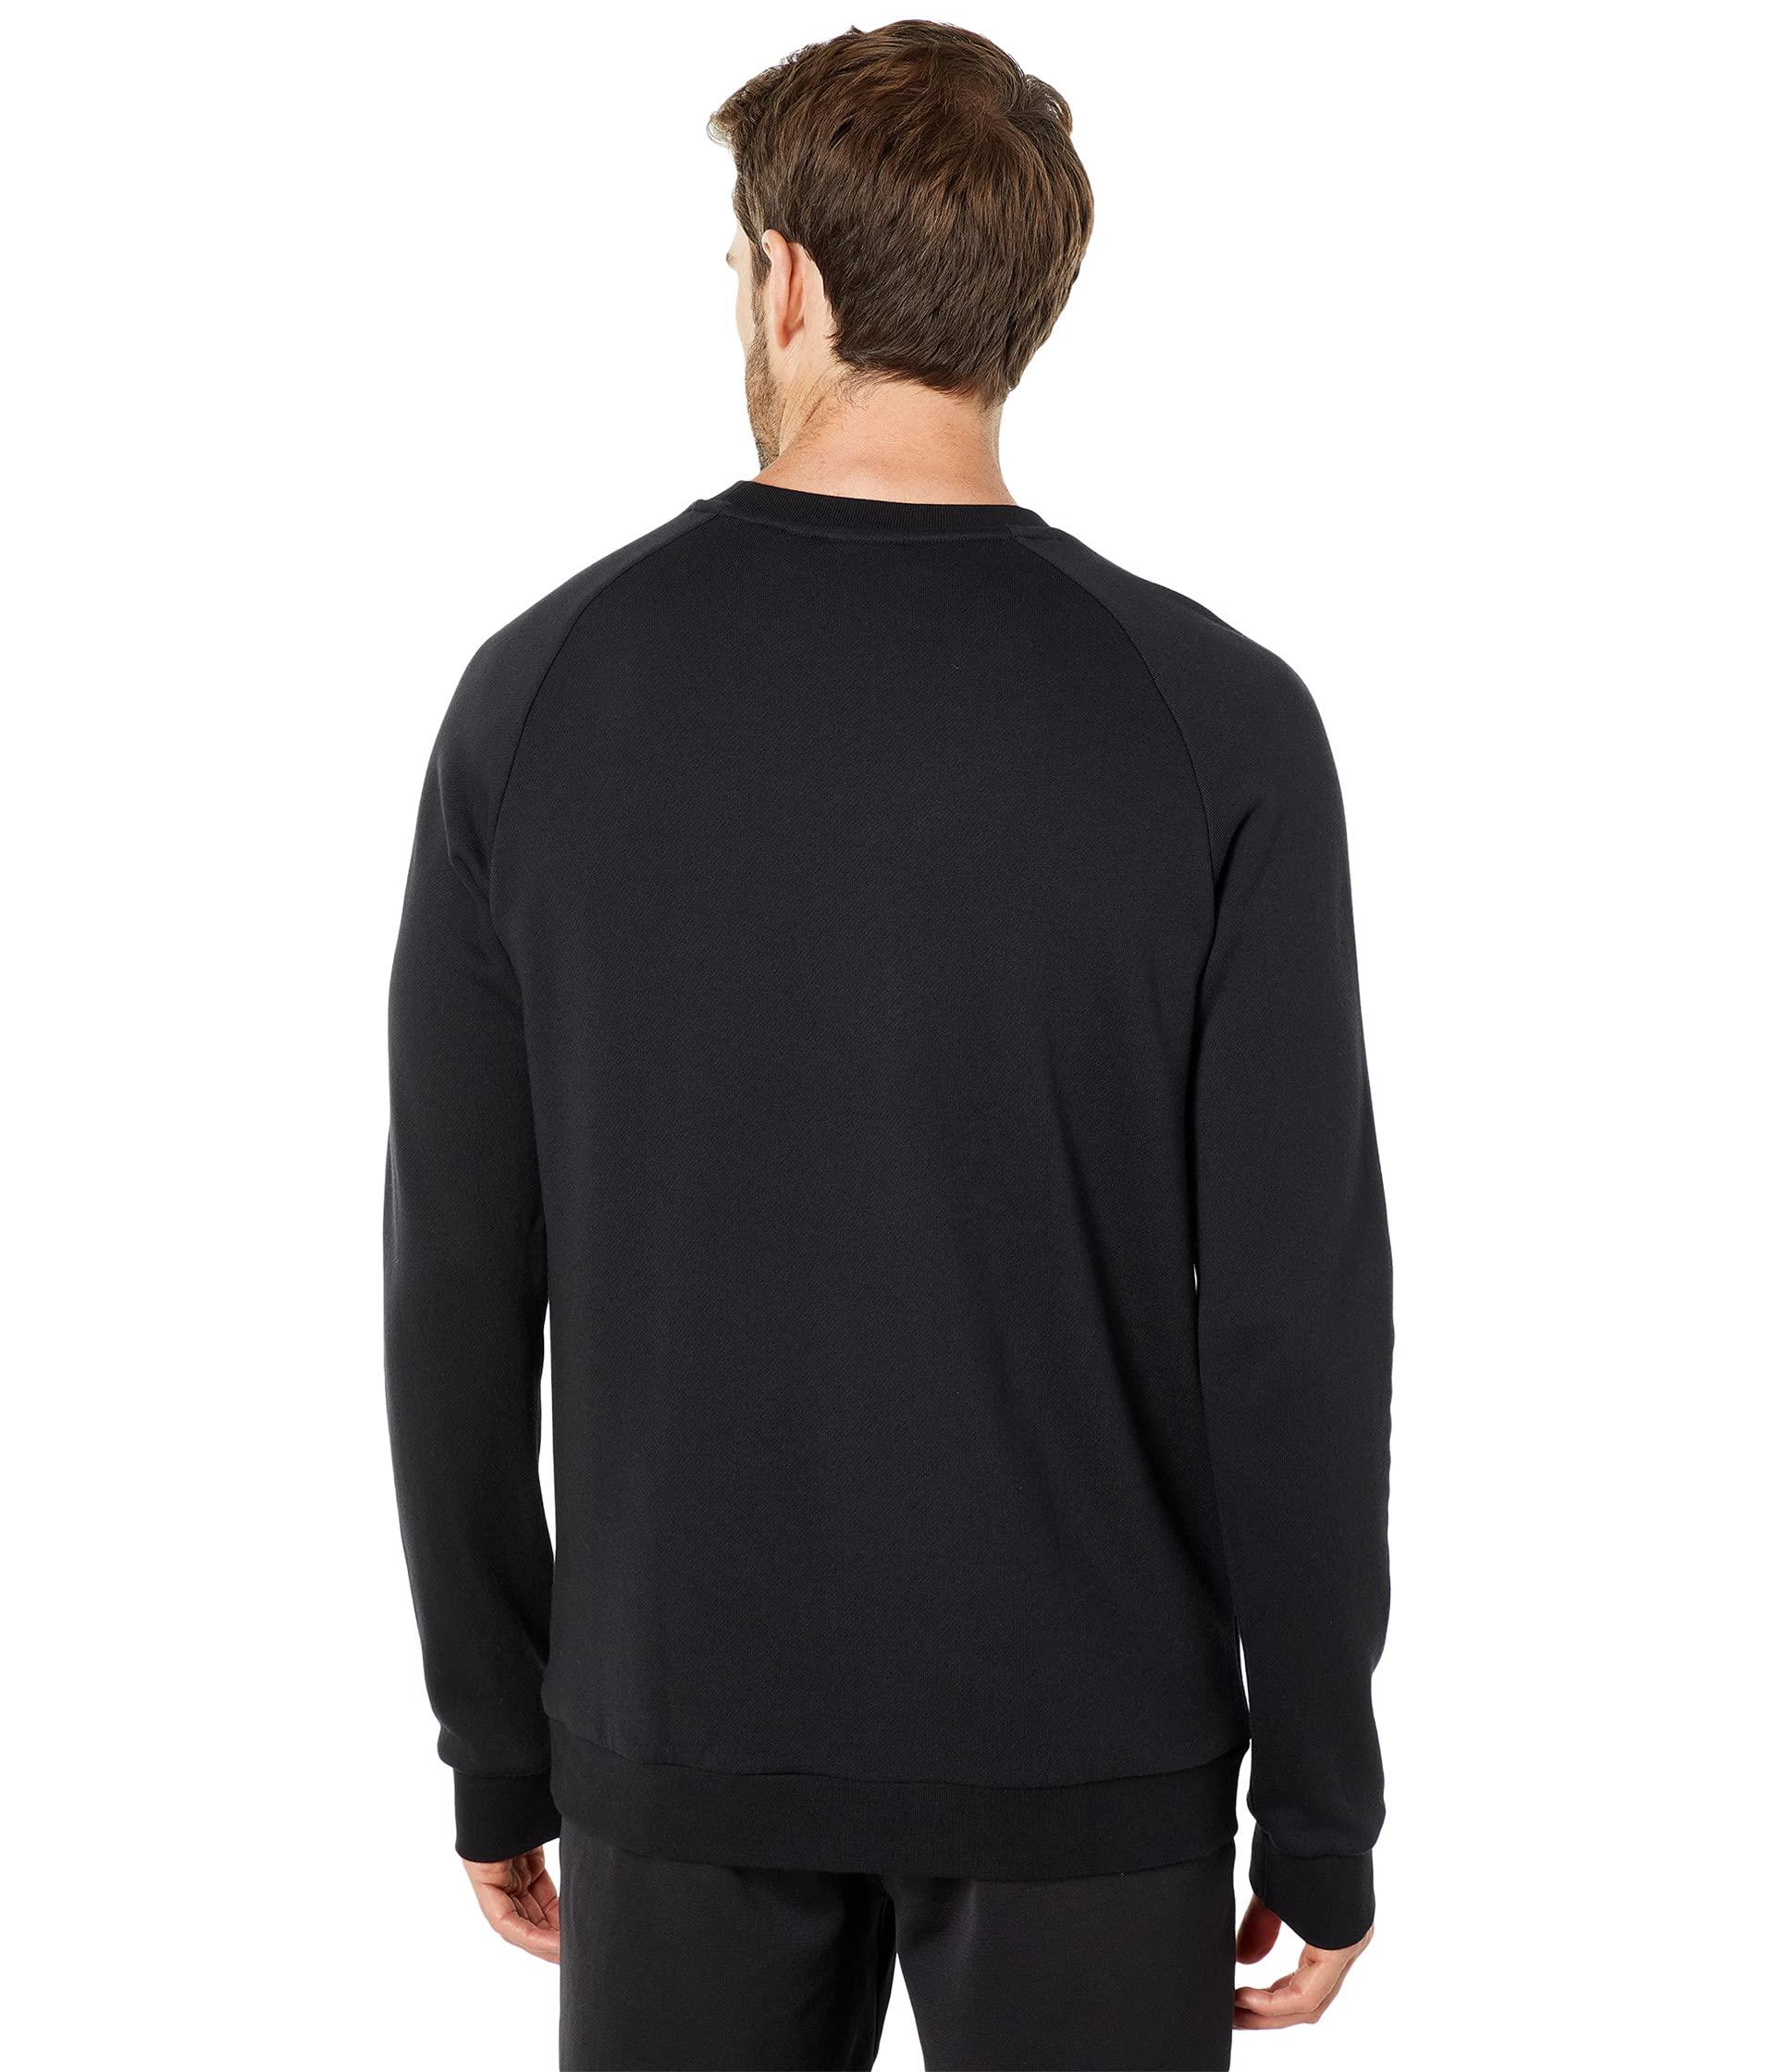 adidas Originals Cotton Trefoil Crew Sweatshirt in Black for Men - Save 58%  | Lyst